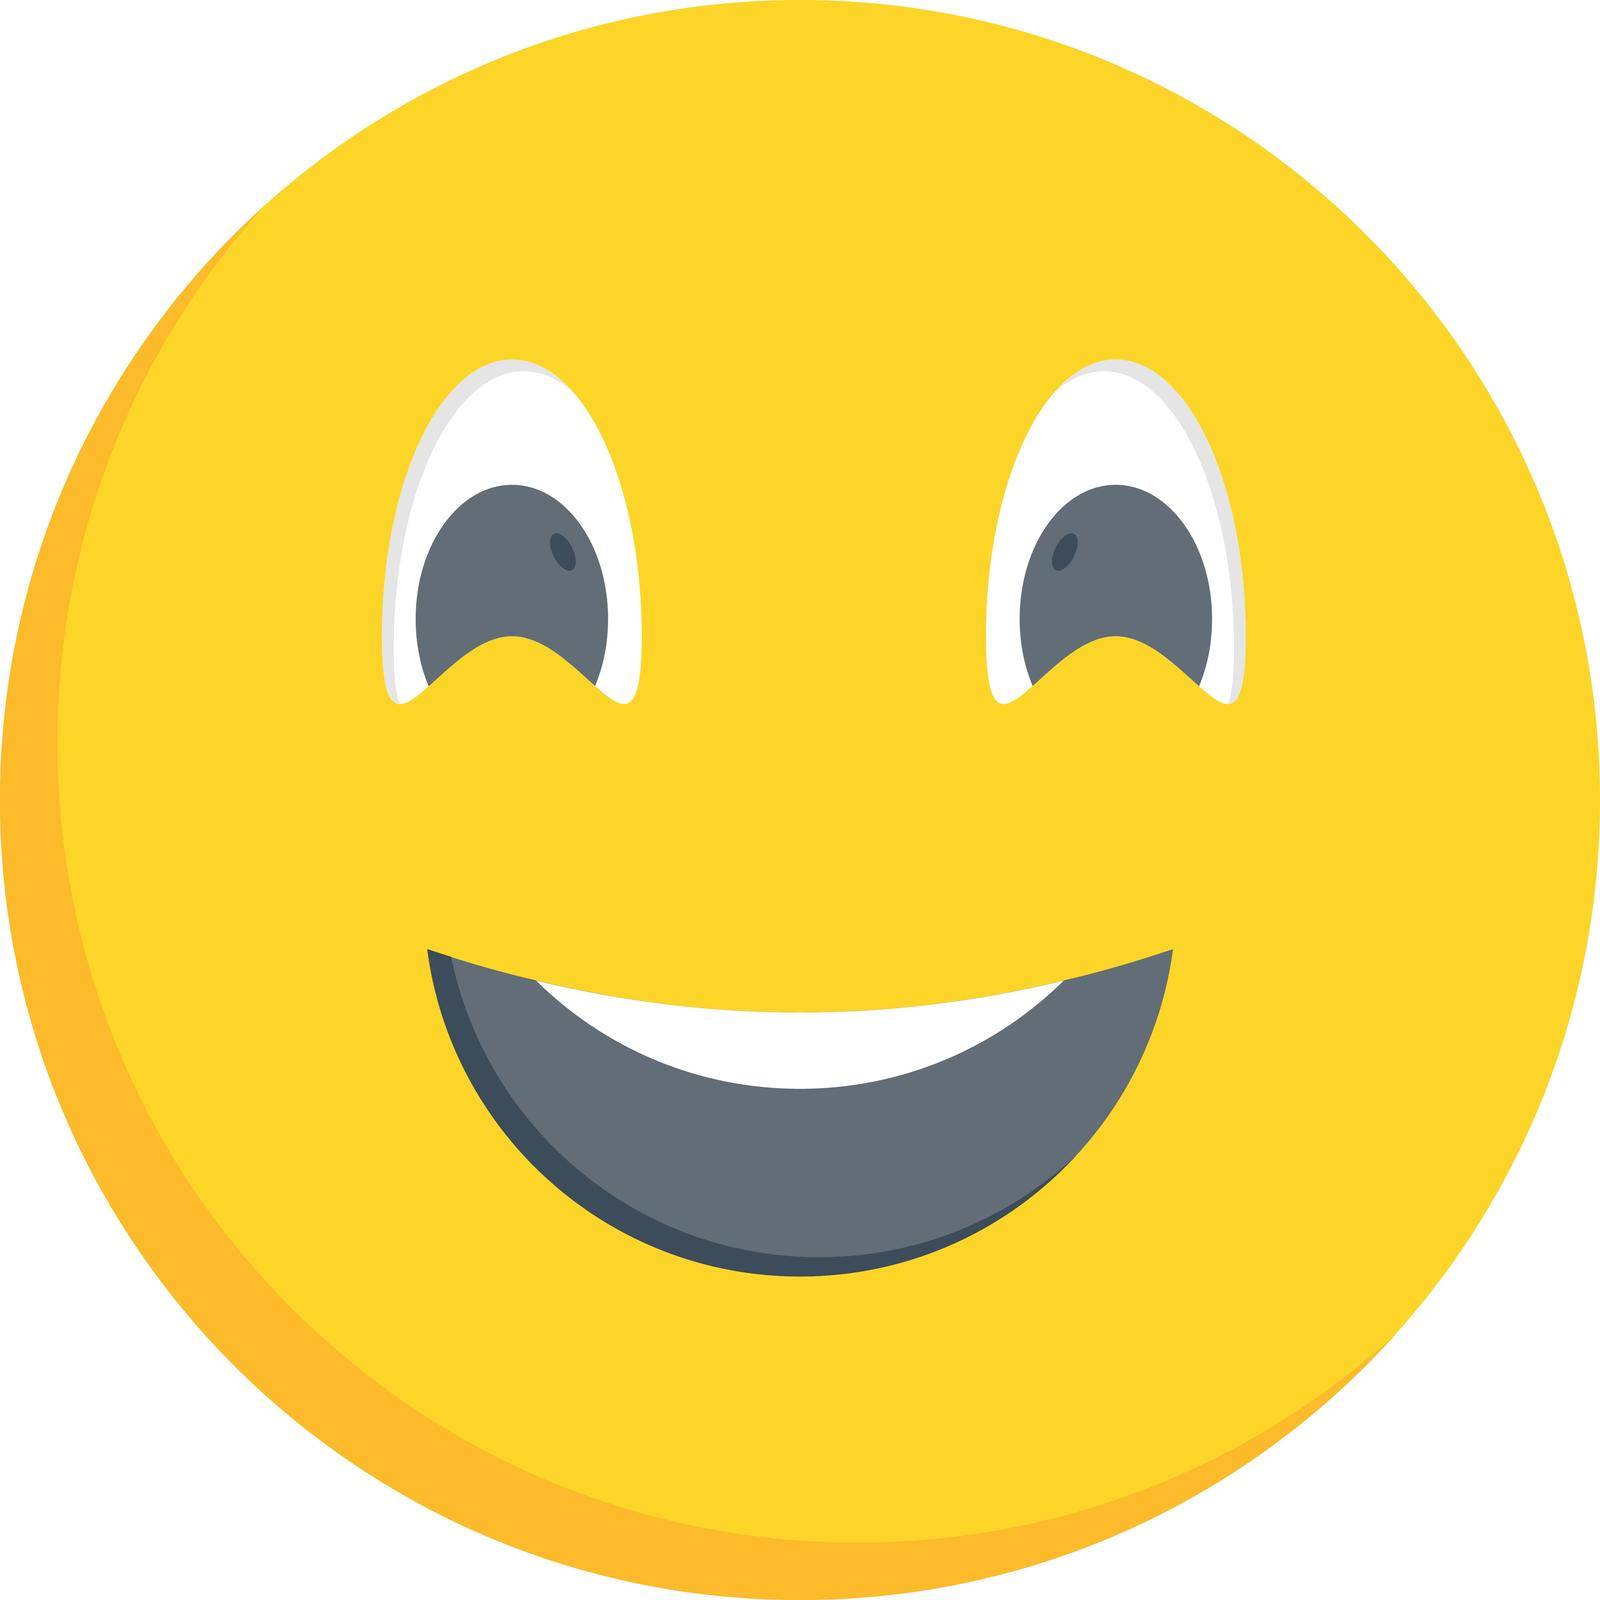 smiling face vector flat colour icon